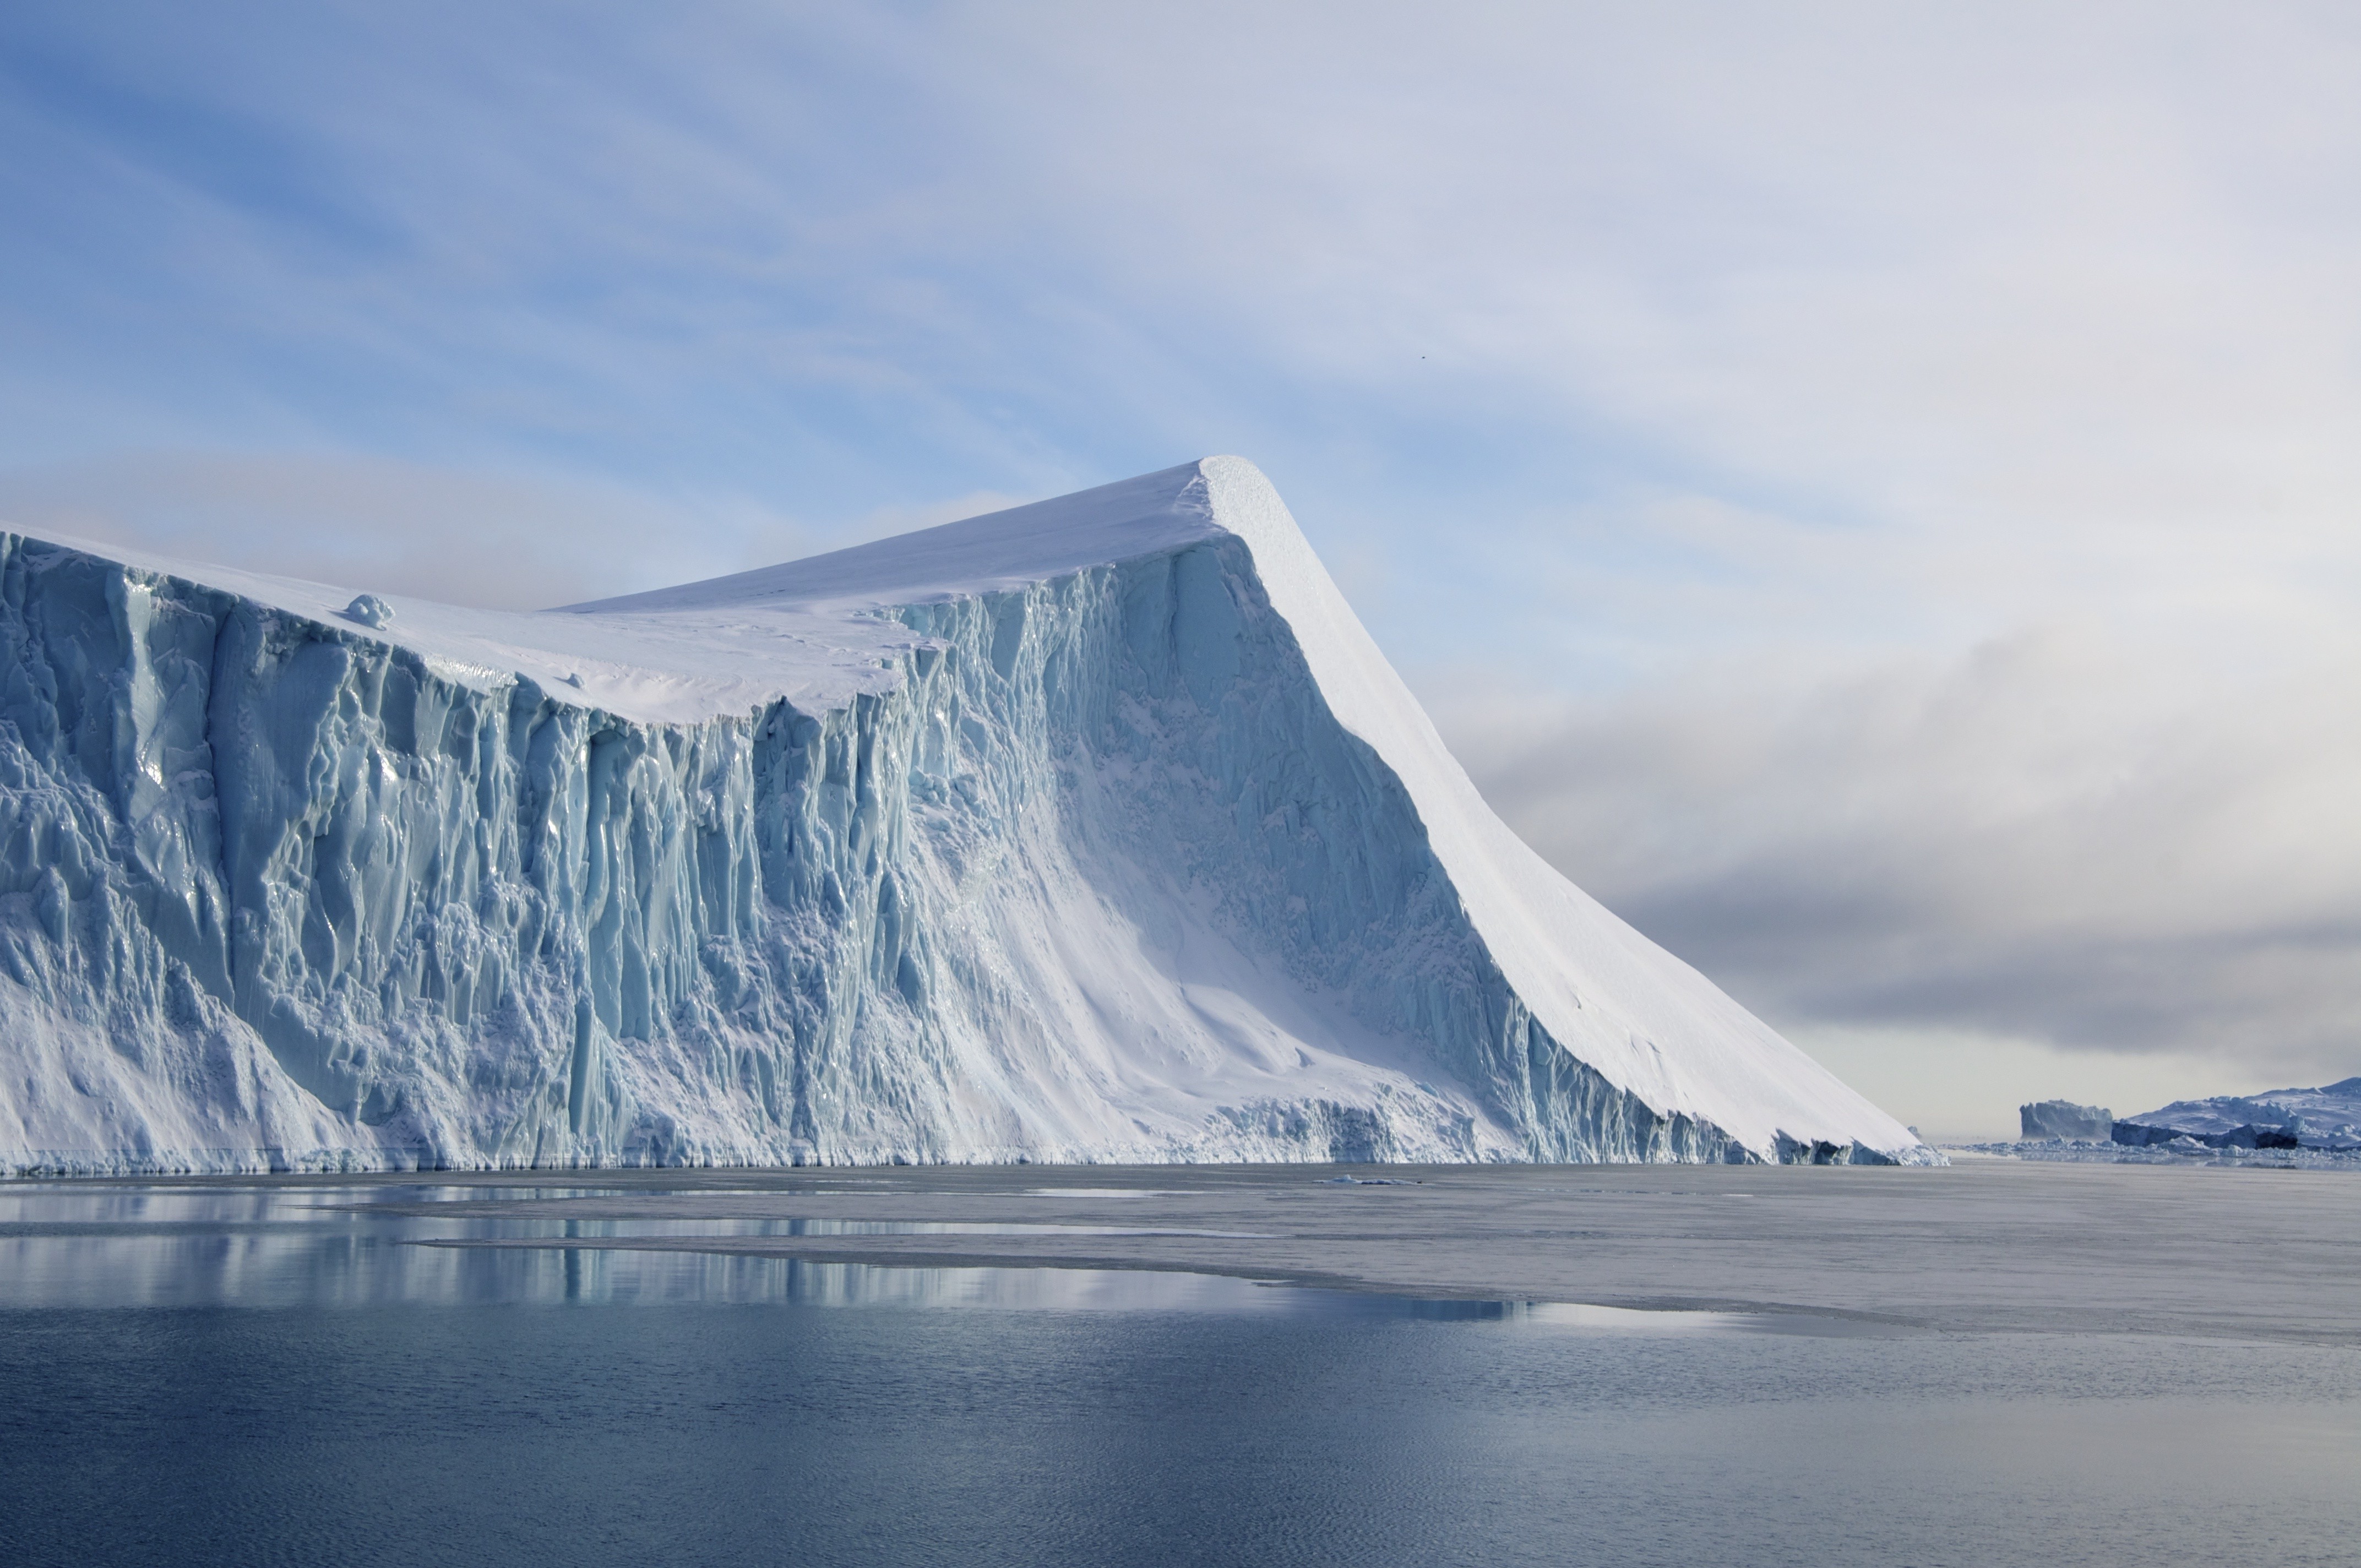 fond d'écran photo nature,la glace,iceberg,océan arctique,arctique,ciel